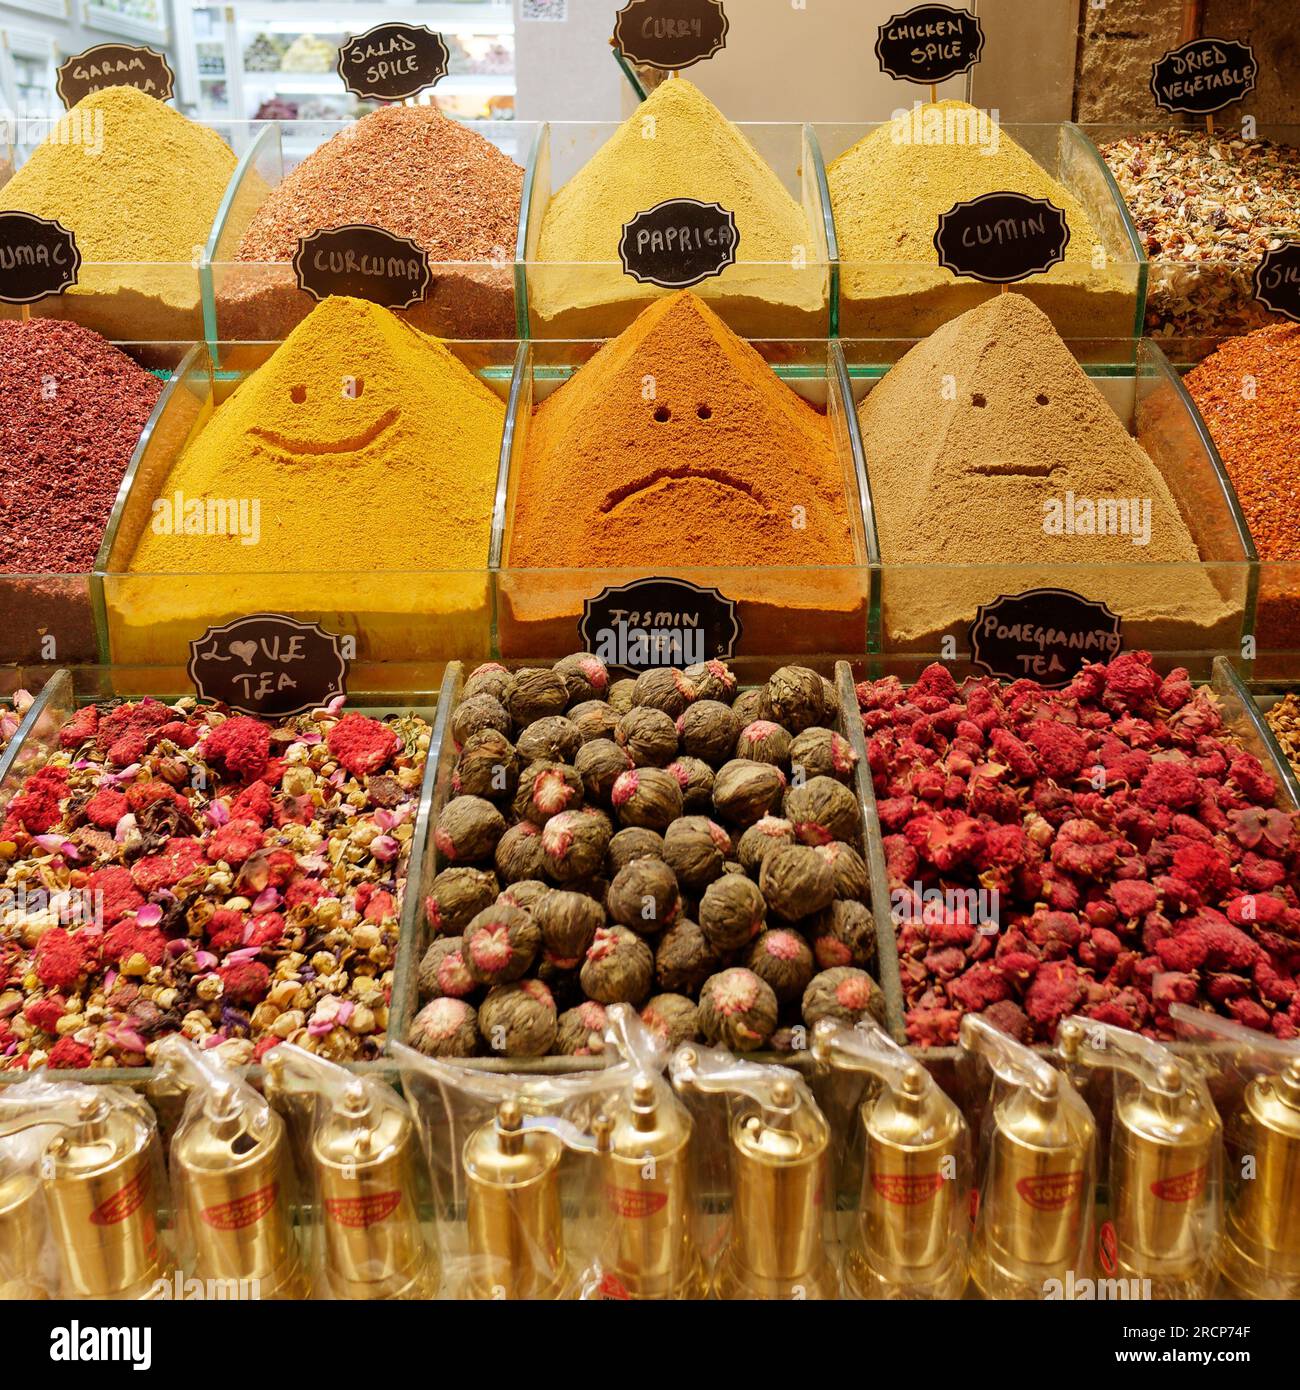 Novelty smiling and sad faces drawn in the spices in the Spice Bazaar (Mısır Çarşısı, meaning Egyptian Bazaar) in Istanbul, Turkey. Stock Photo